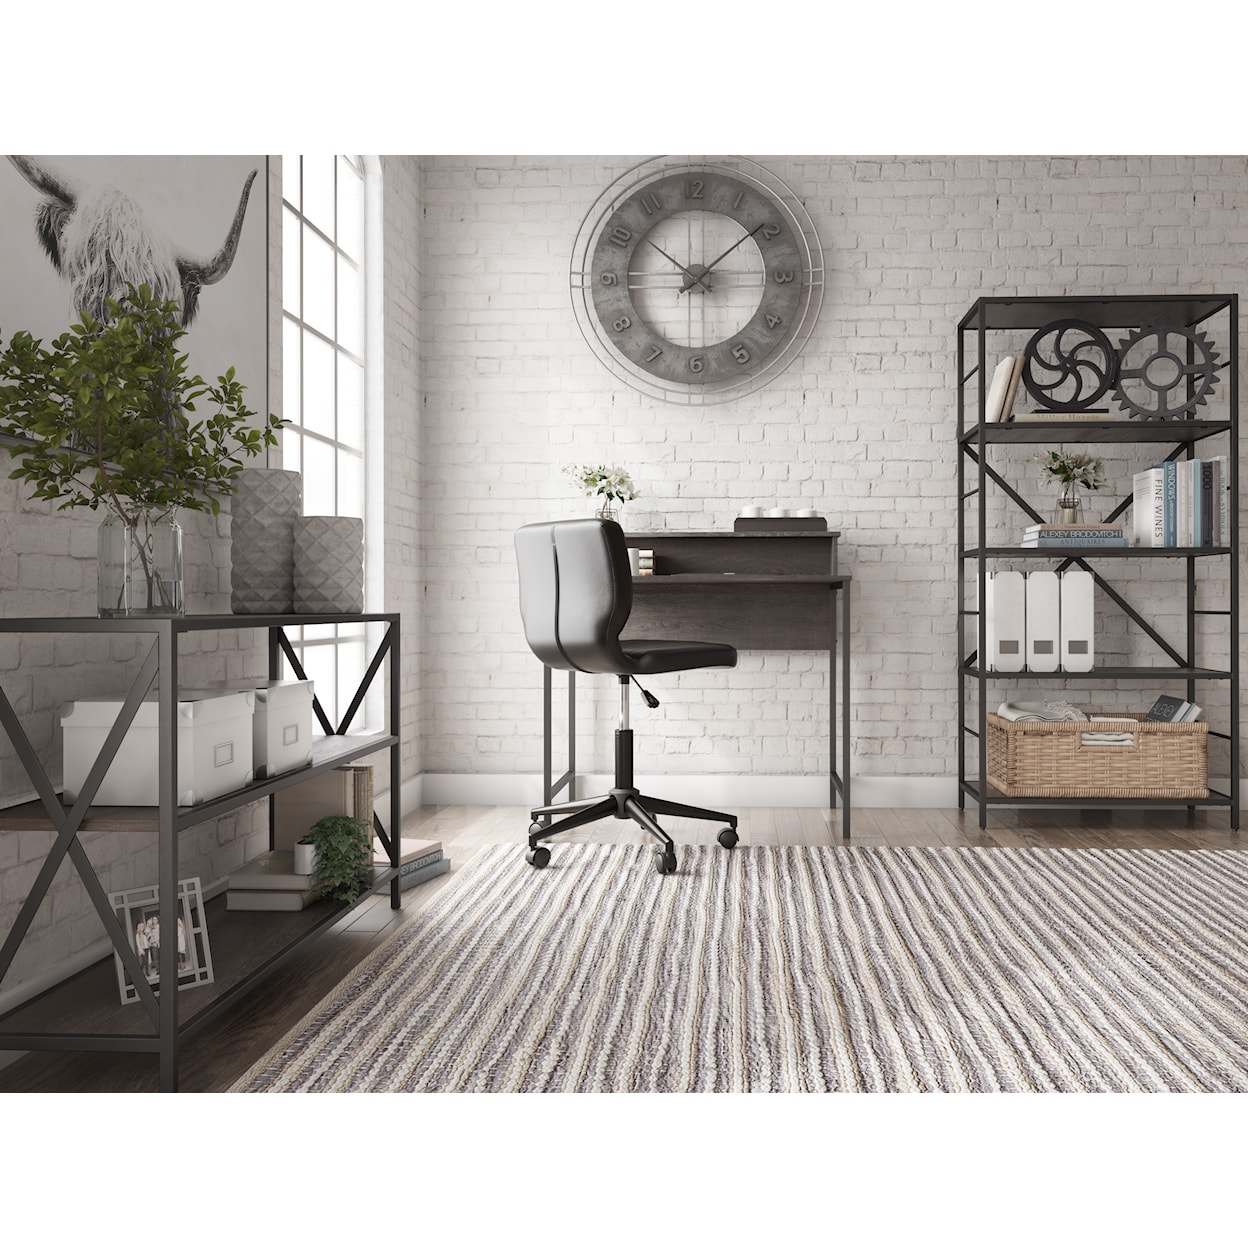 Ashley Furniture Signature Design Freedan Desk